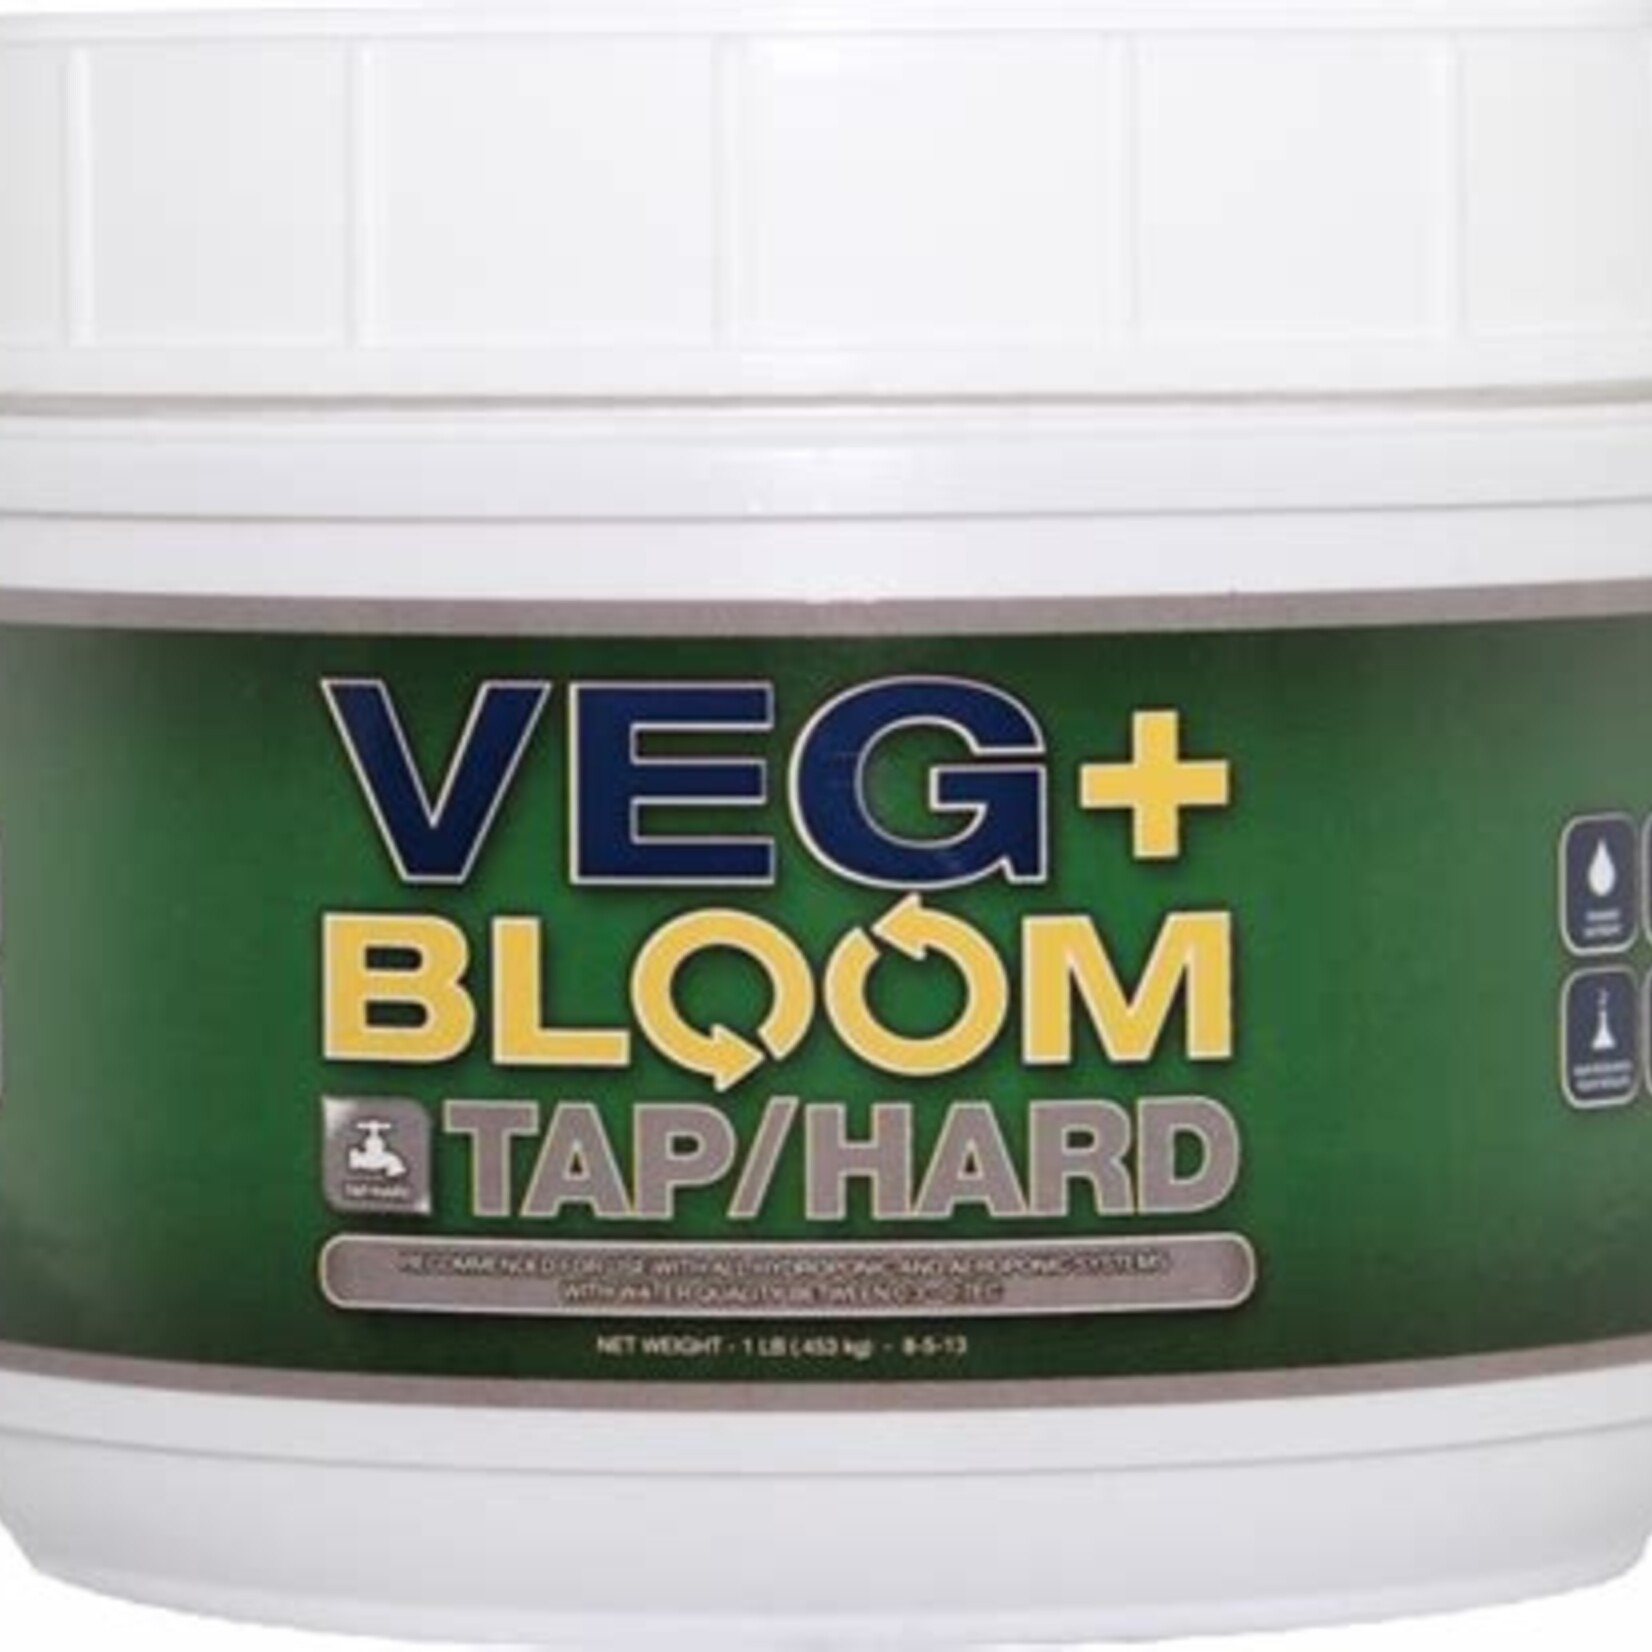 Veg+Bloom VEG+BLOOM TAP/HARD BASE, 1 lb